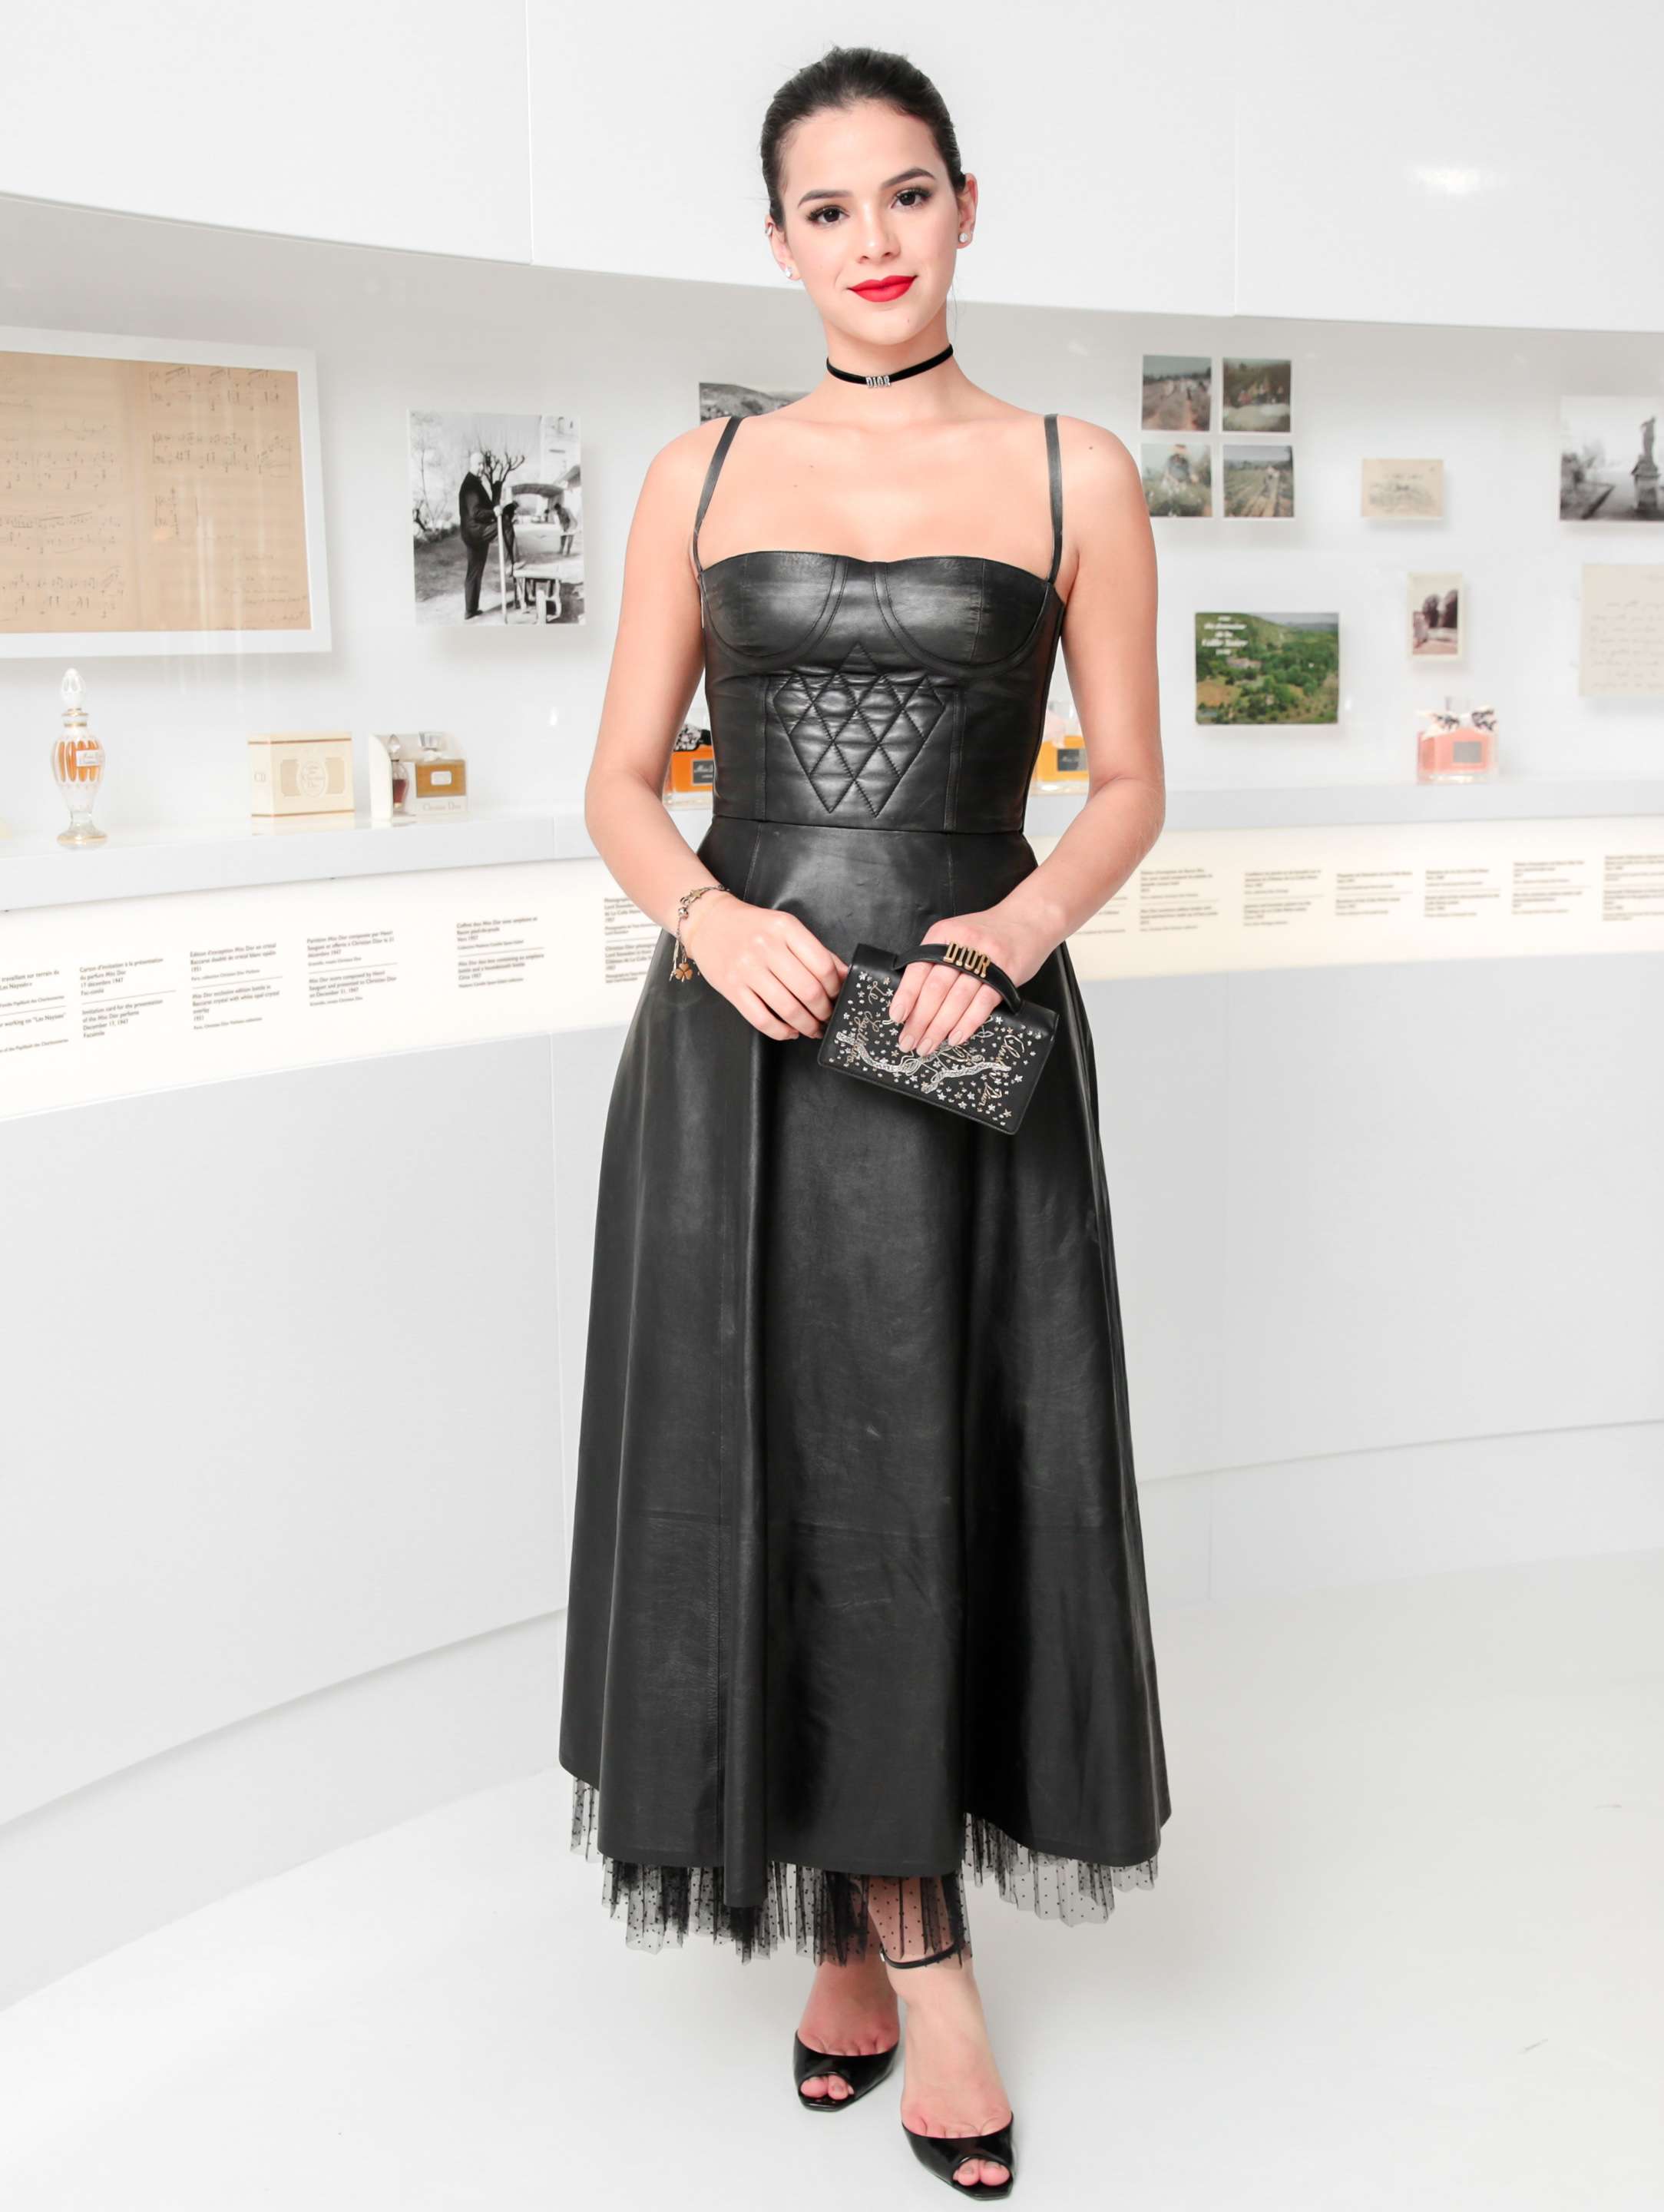 Bruna Marquezine attends Dior Arts Deco 2017